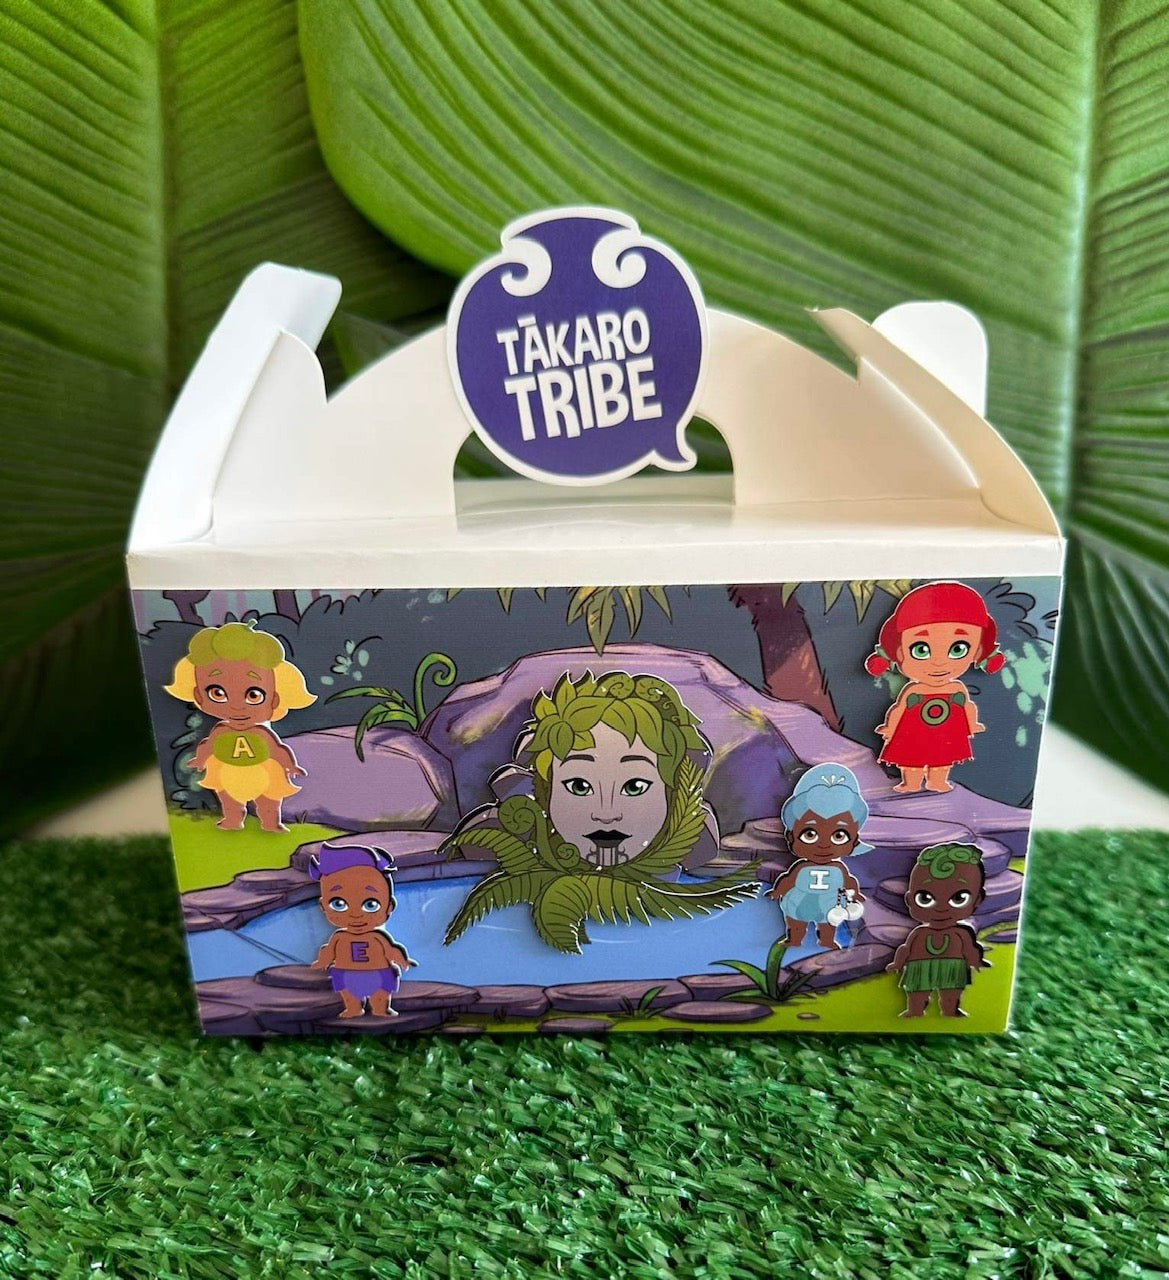 Tākaro Tribe treat boxes